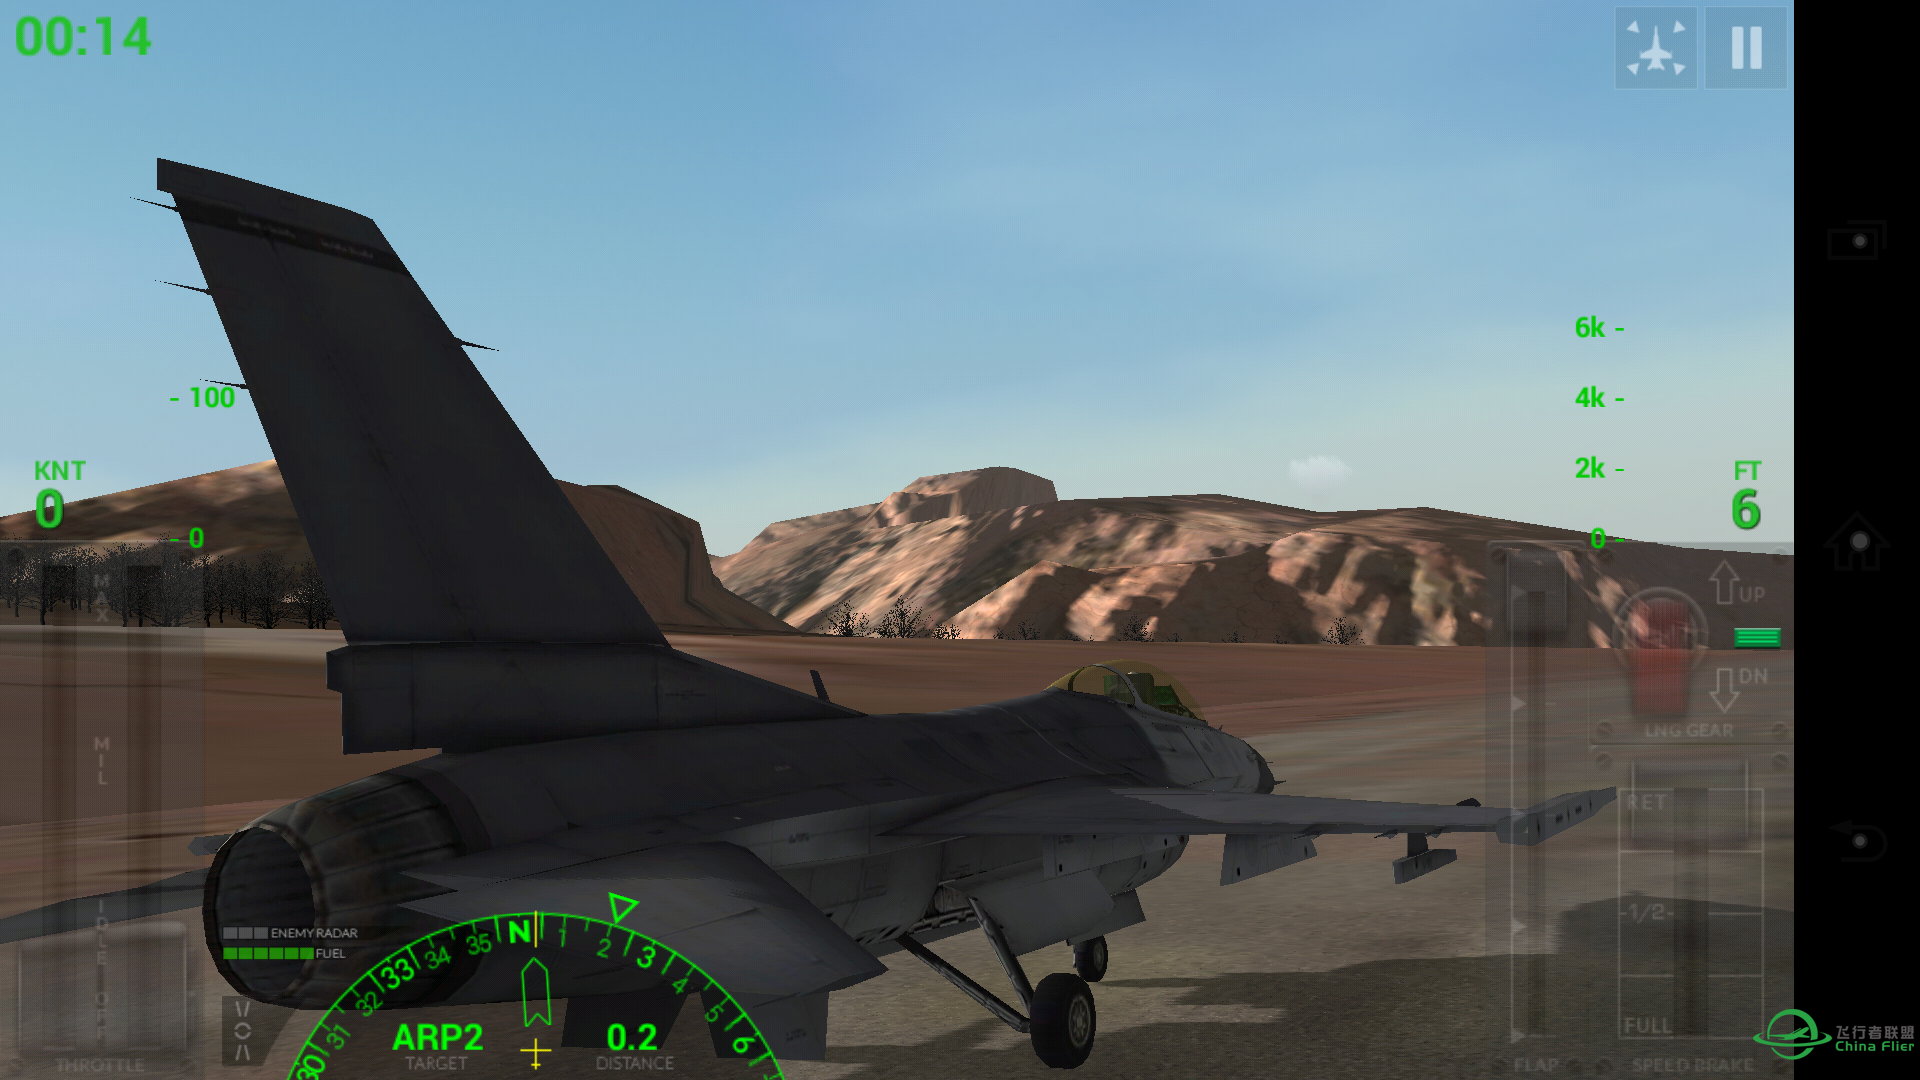 [截图而已]F18 Carrier Landing2 Pro-4446 